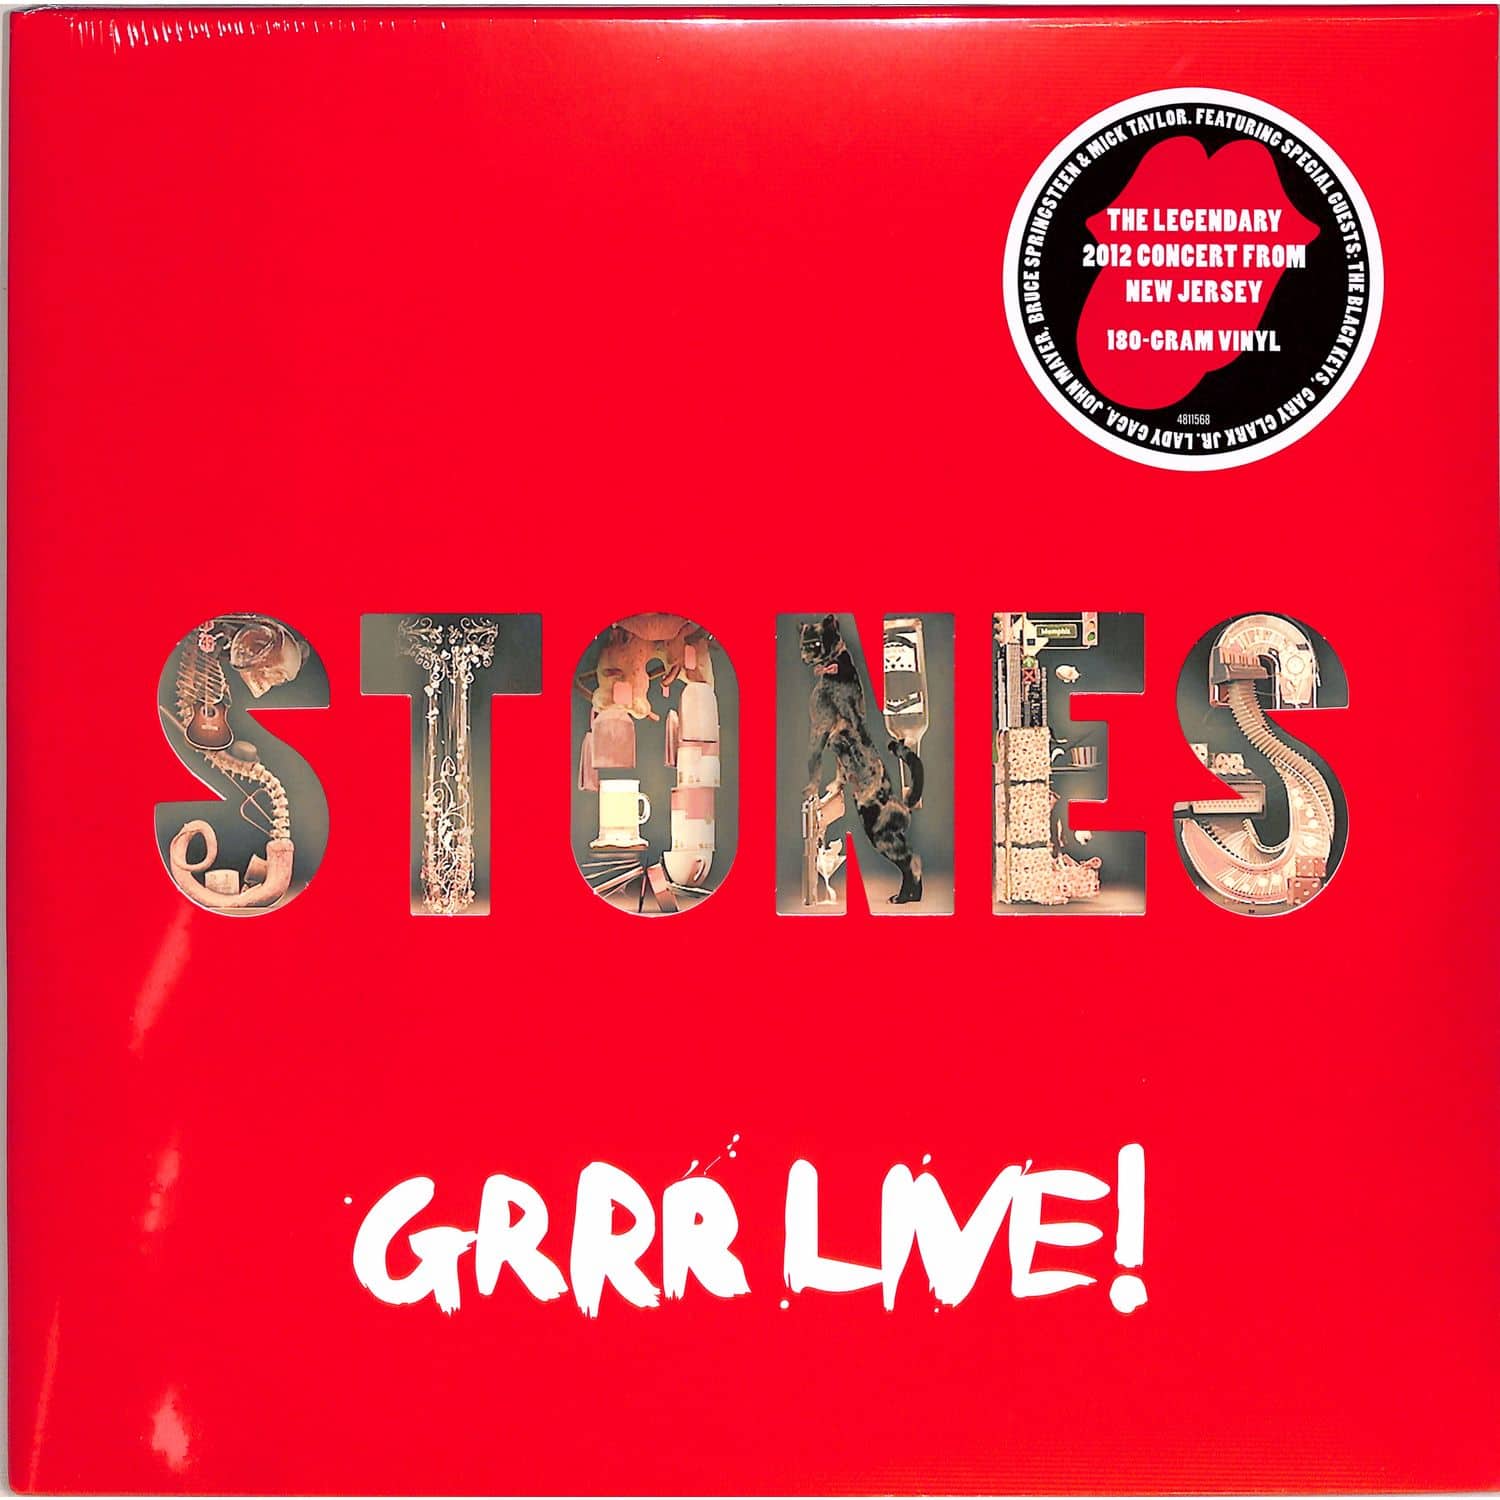 The Rolling Stones - GRRR LIVE! LIVE AT NEWARK 